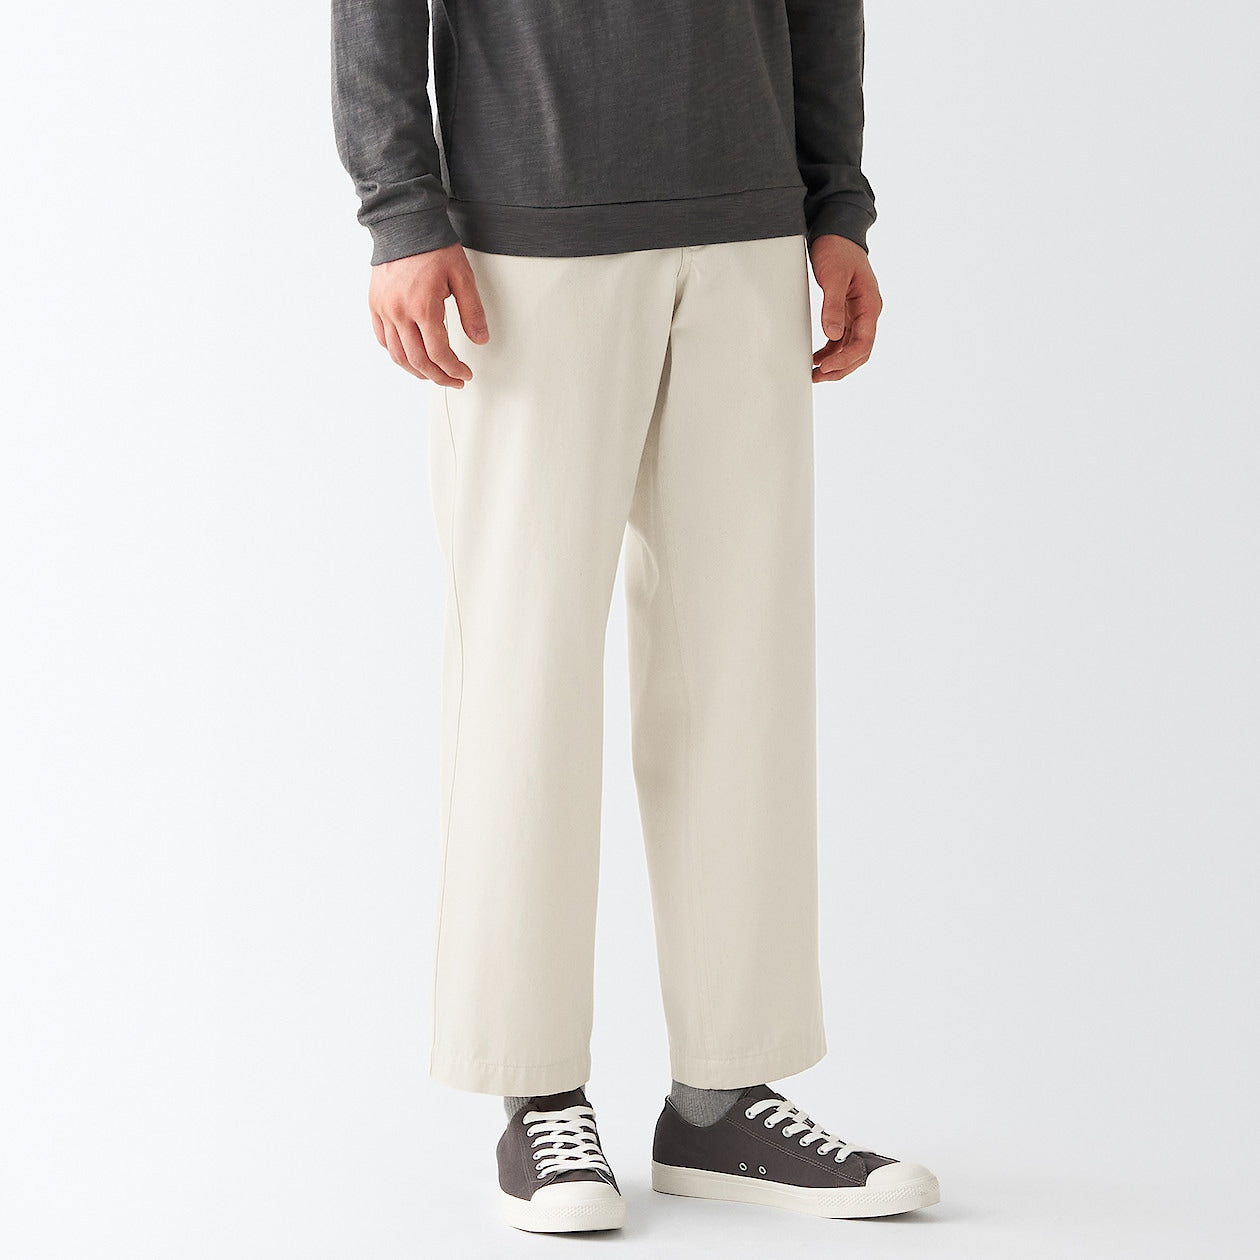 Men's Chino Regular Pants Inseam (L 30inch / 76cm)